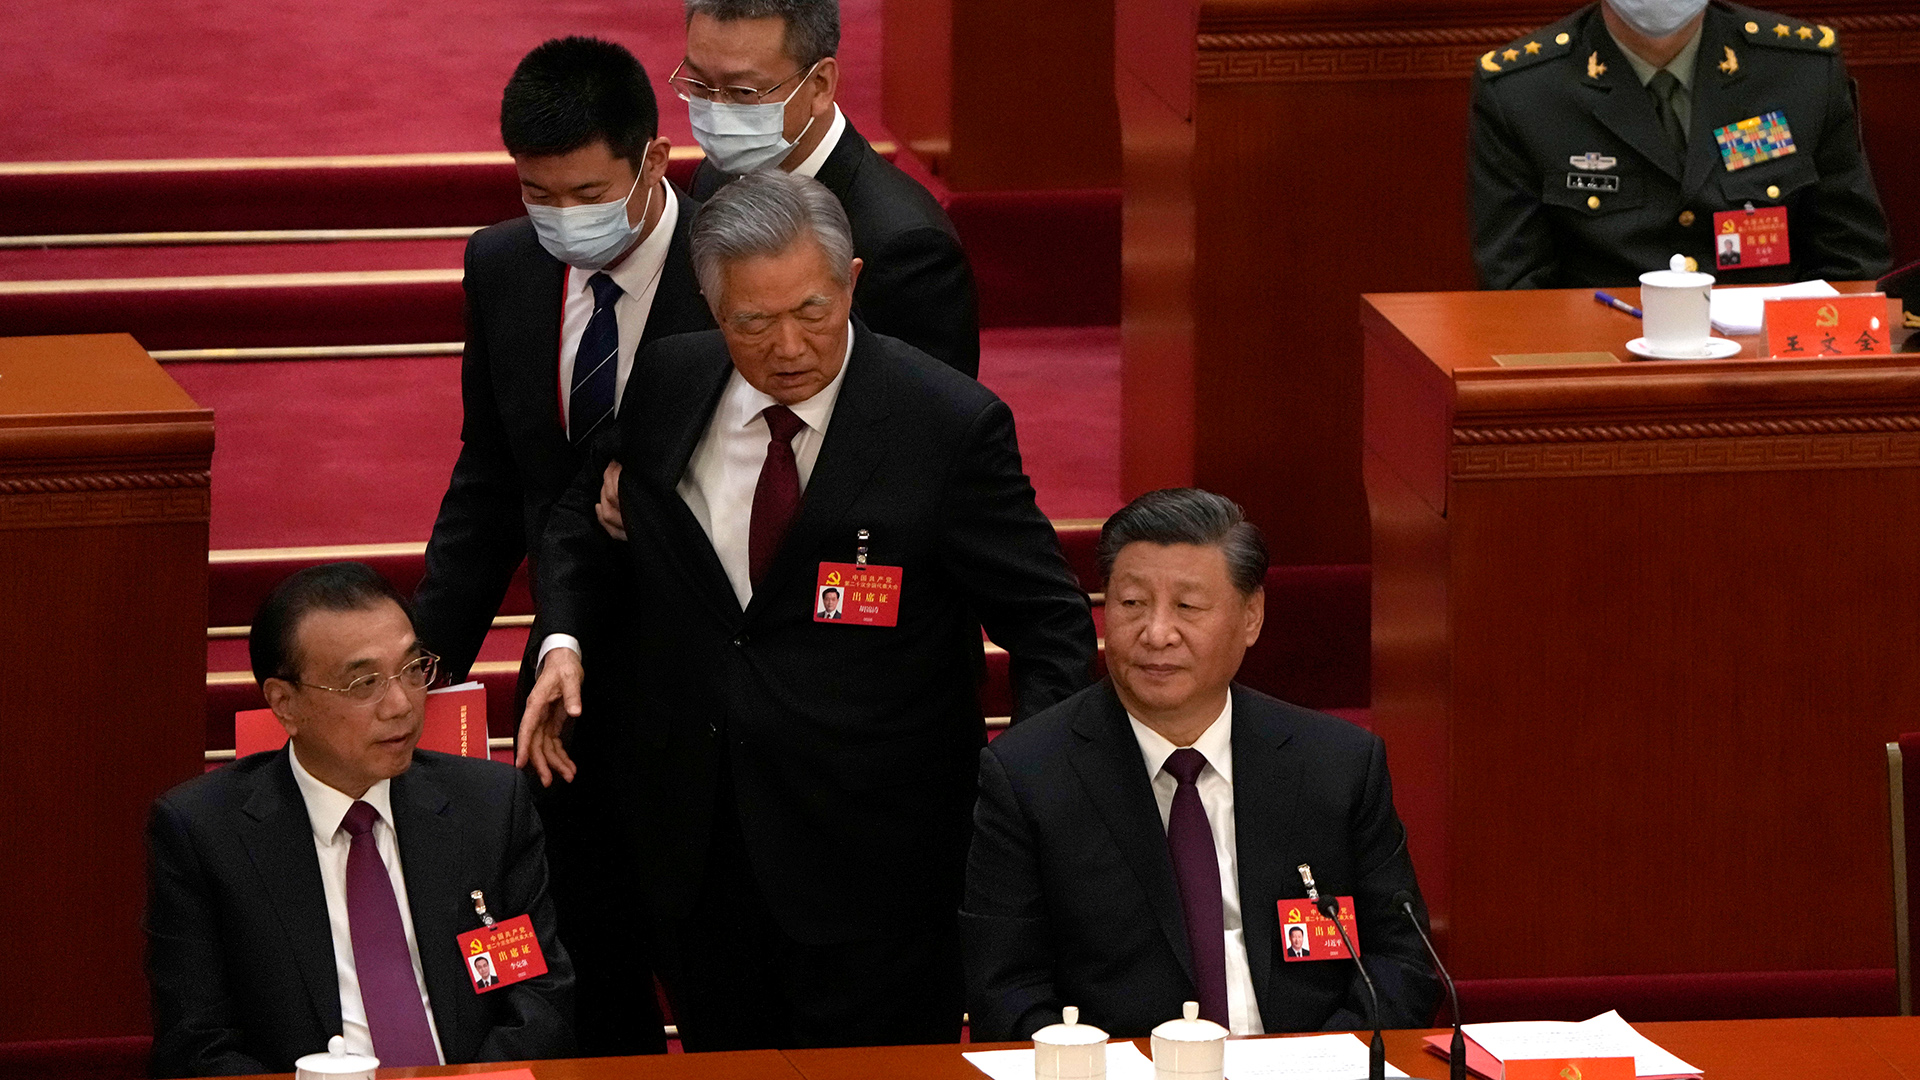 Parteitag in China: Xis Macht zementiert – Eklat provoziert